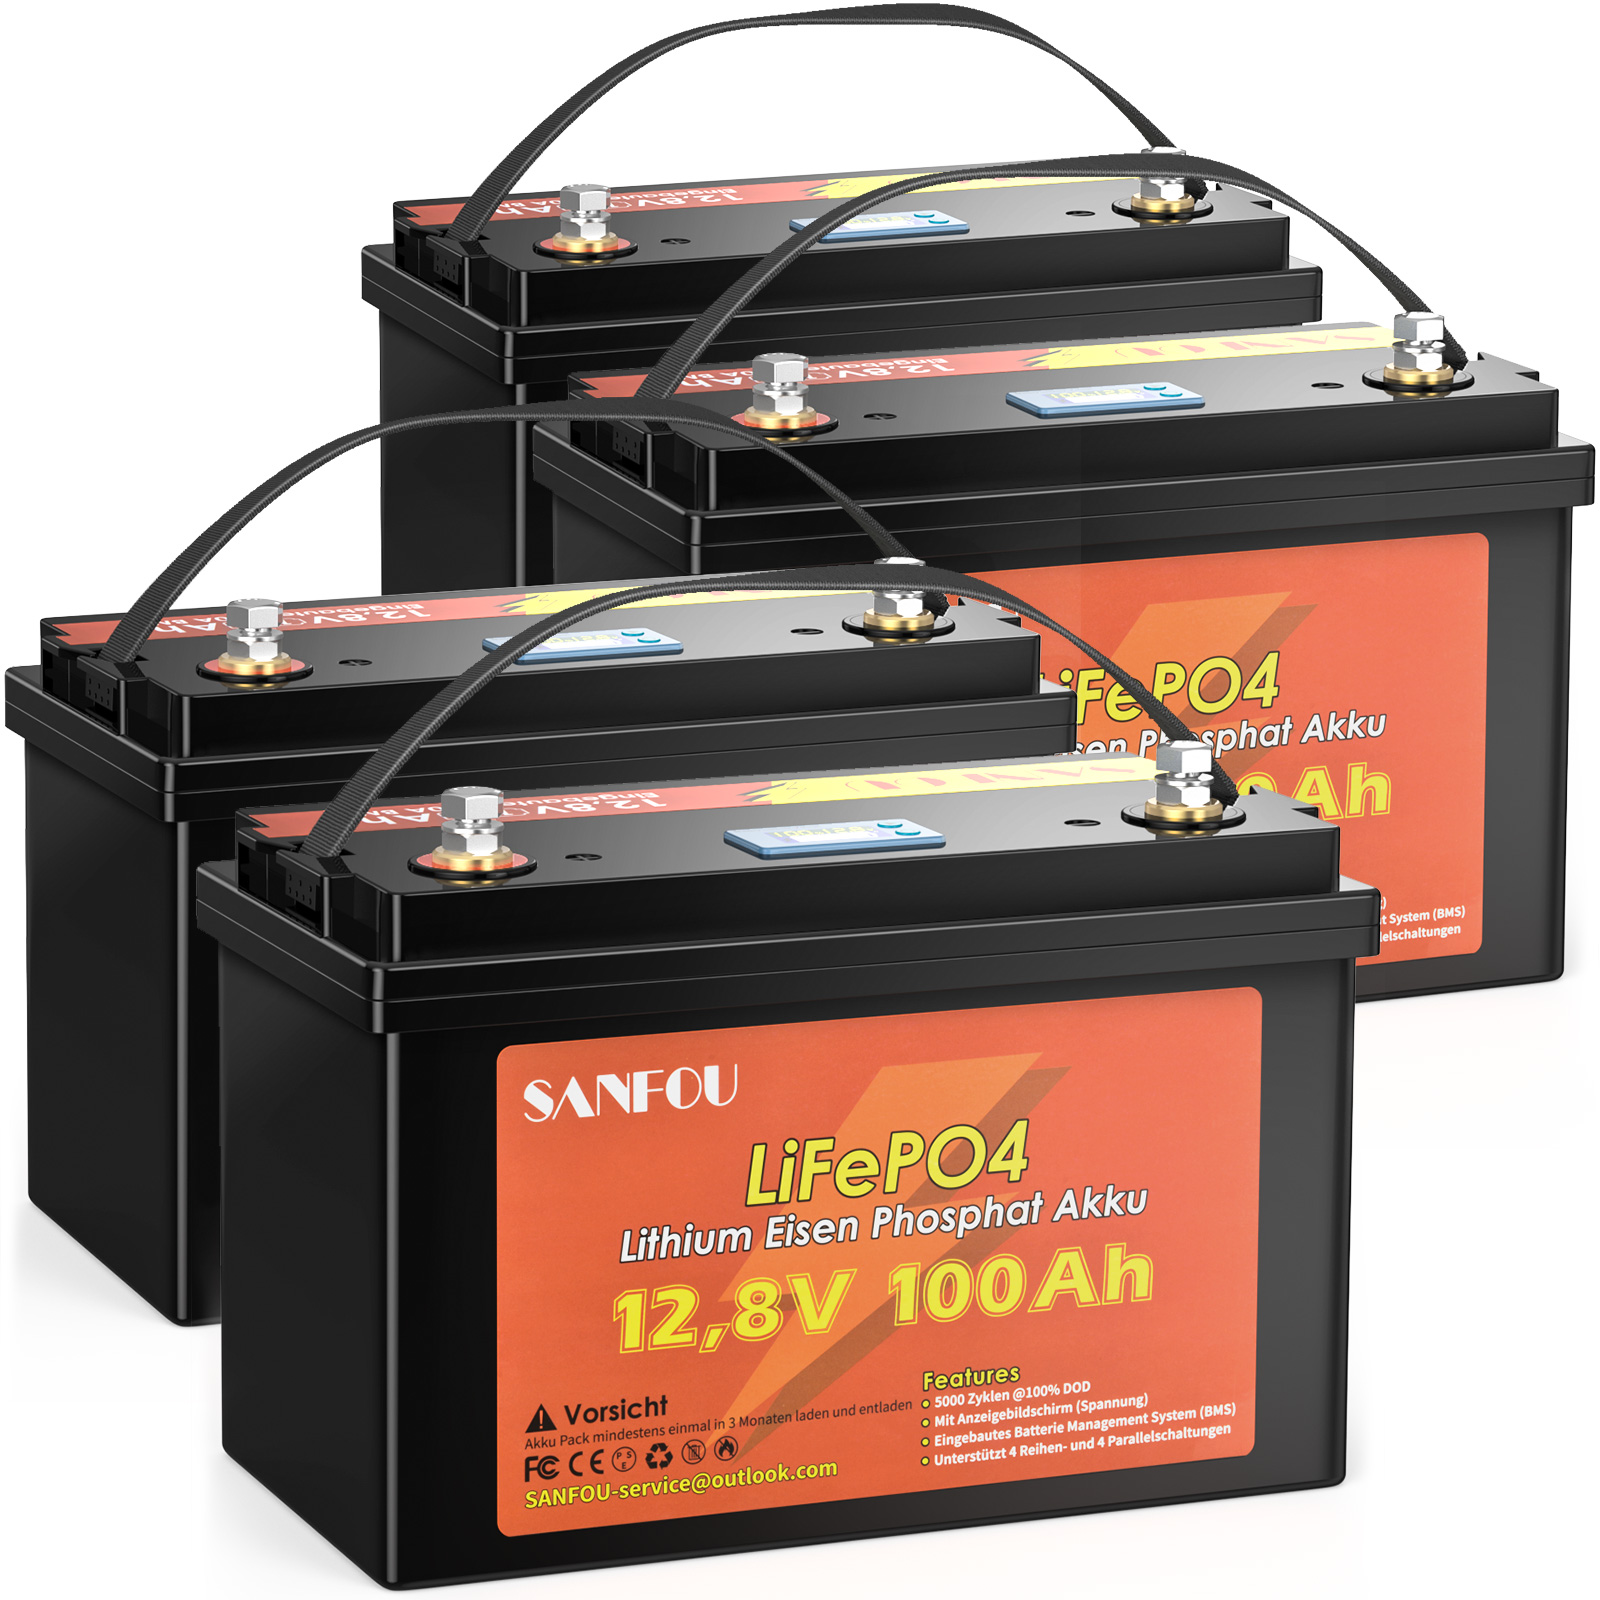 SANFOU 12.8 V 100 Ah LiFePO4 Battery Pack 4